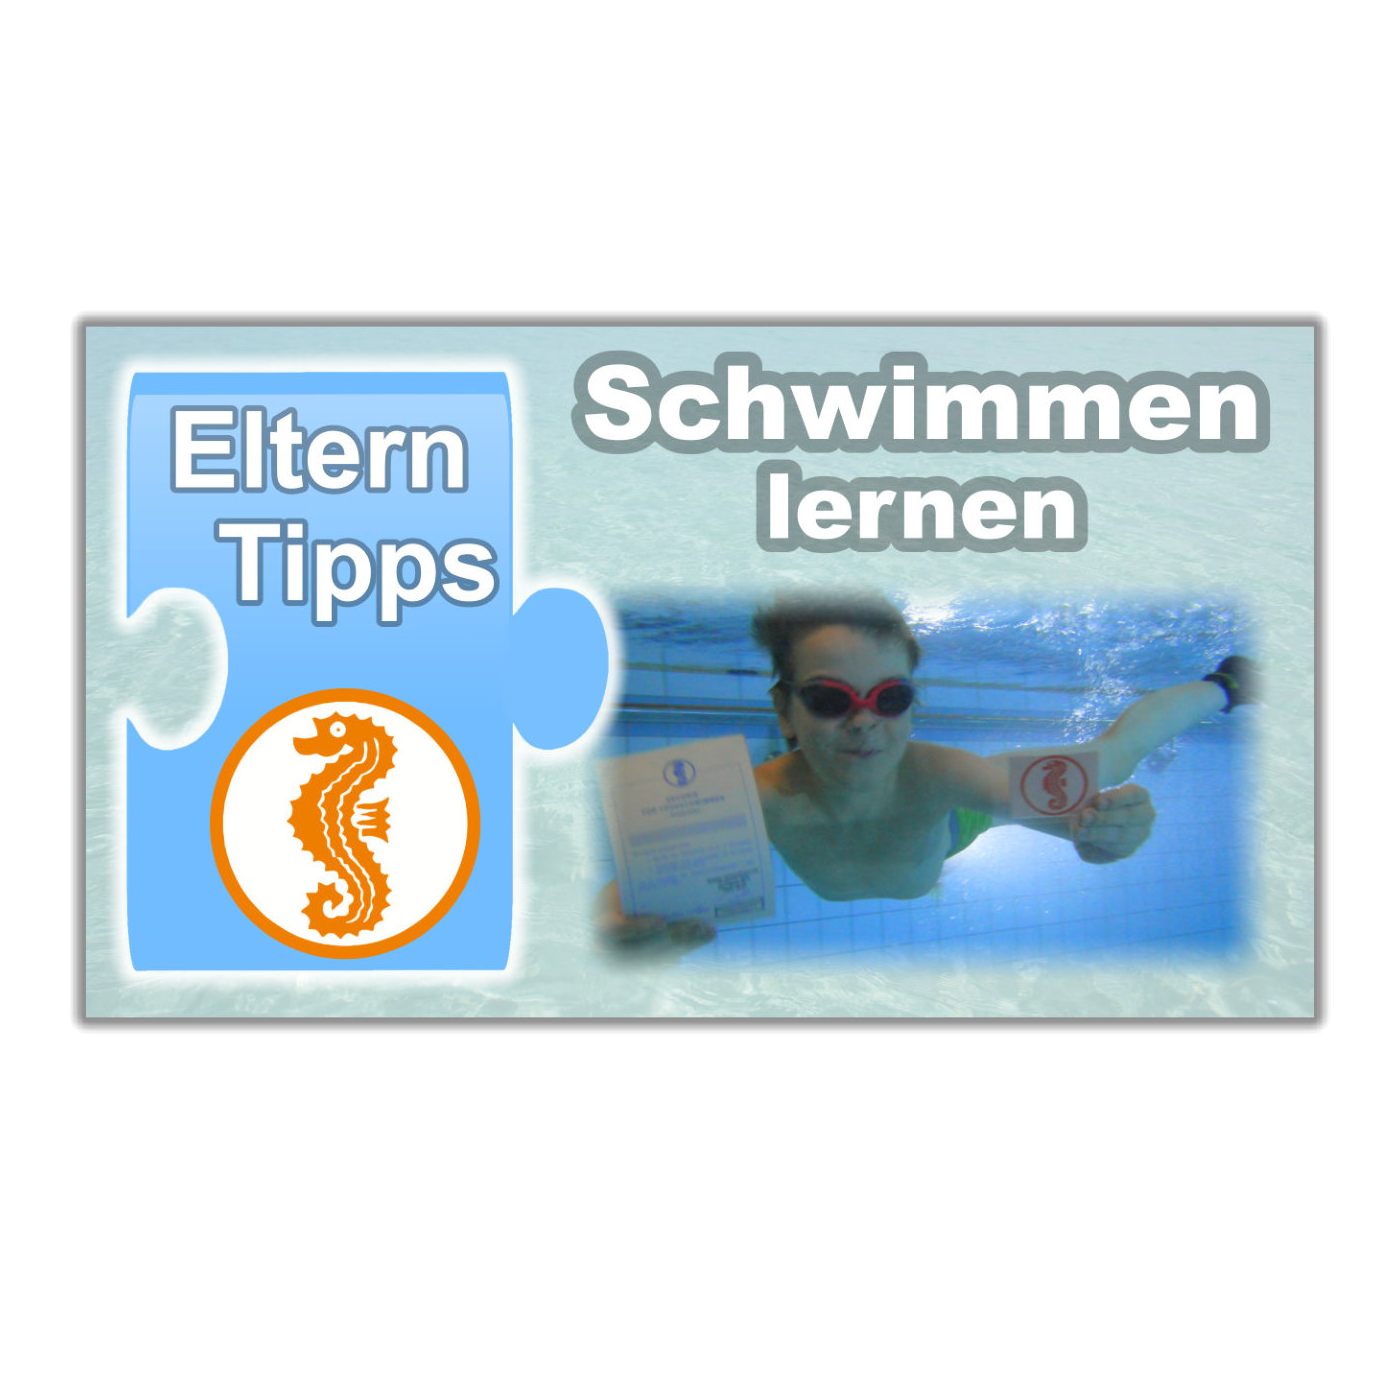 (c) Kreativ-schwimmschule.de